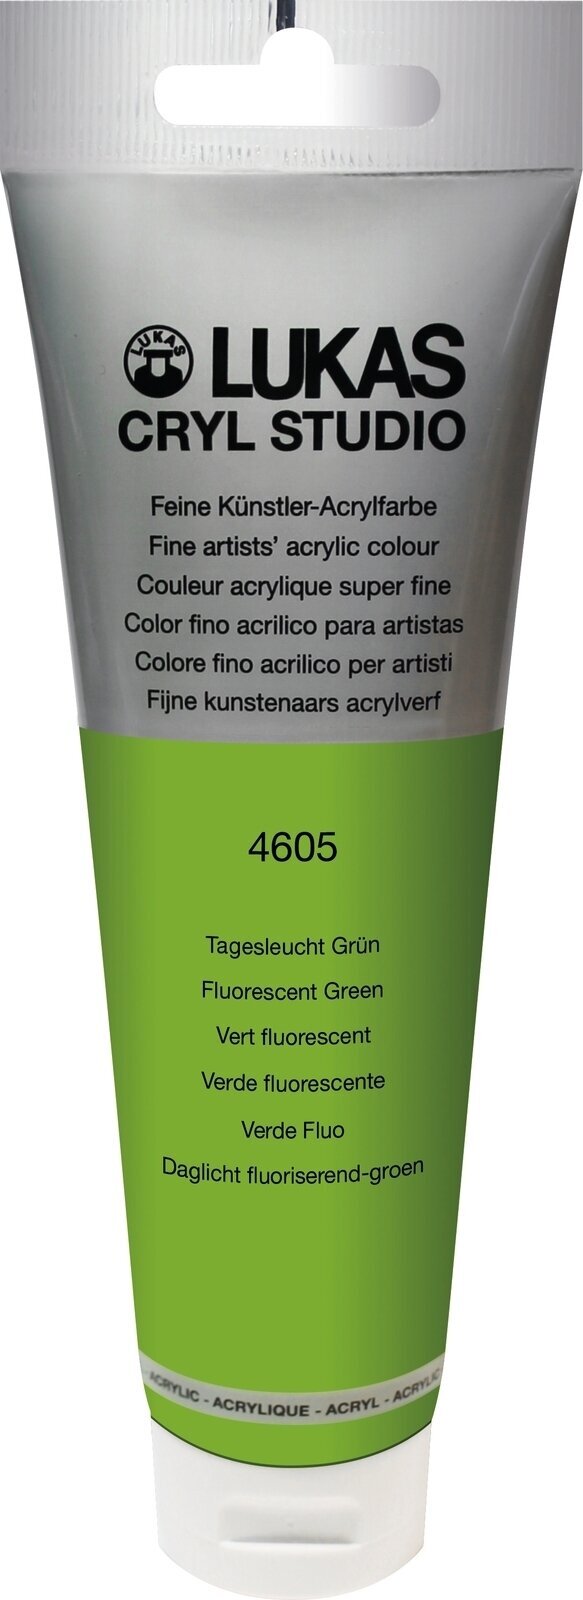 Acrylfarbe Lukas Cryl Studio Acrylic Paint Plastic Tube Acrylfarbe Fluorescent Green 125 ml 1 Stck